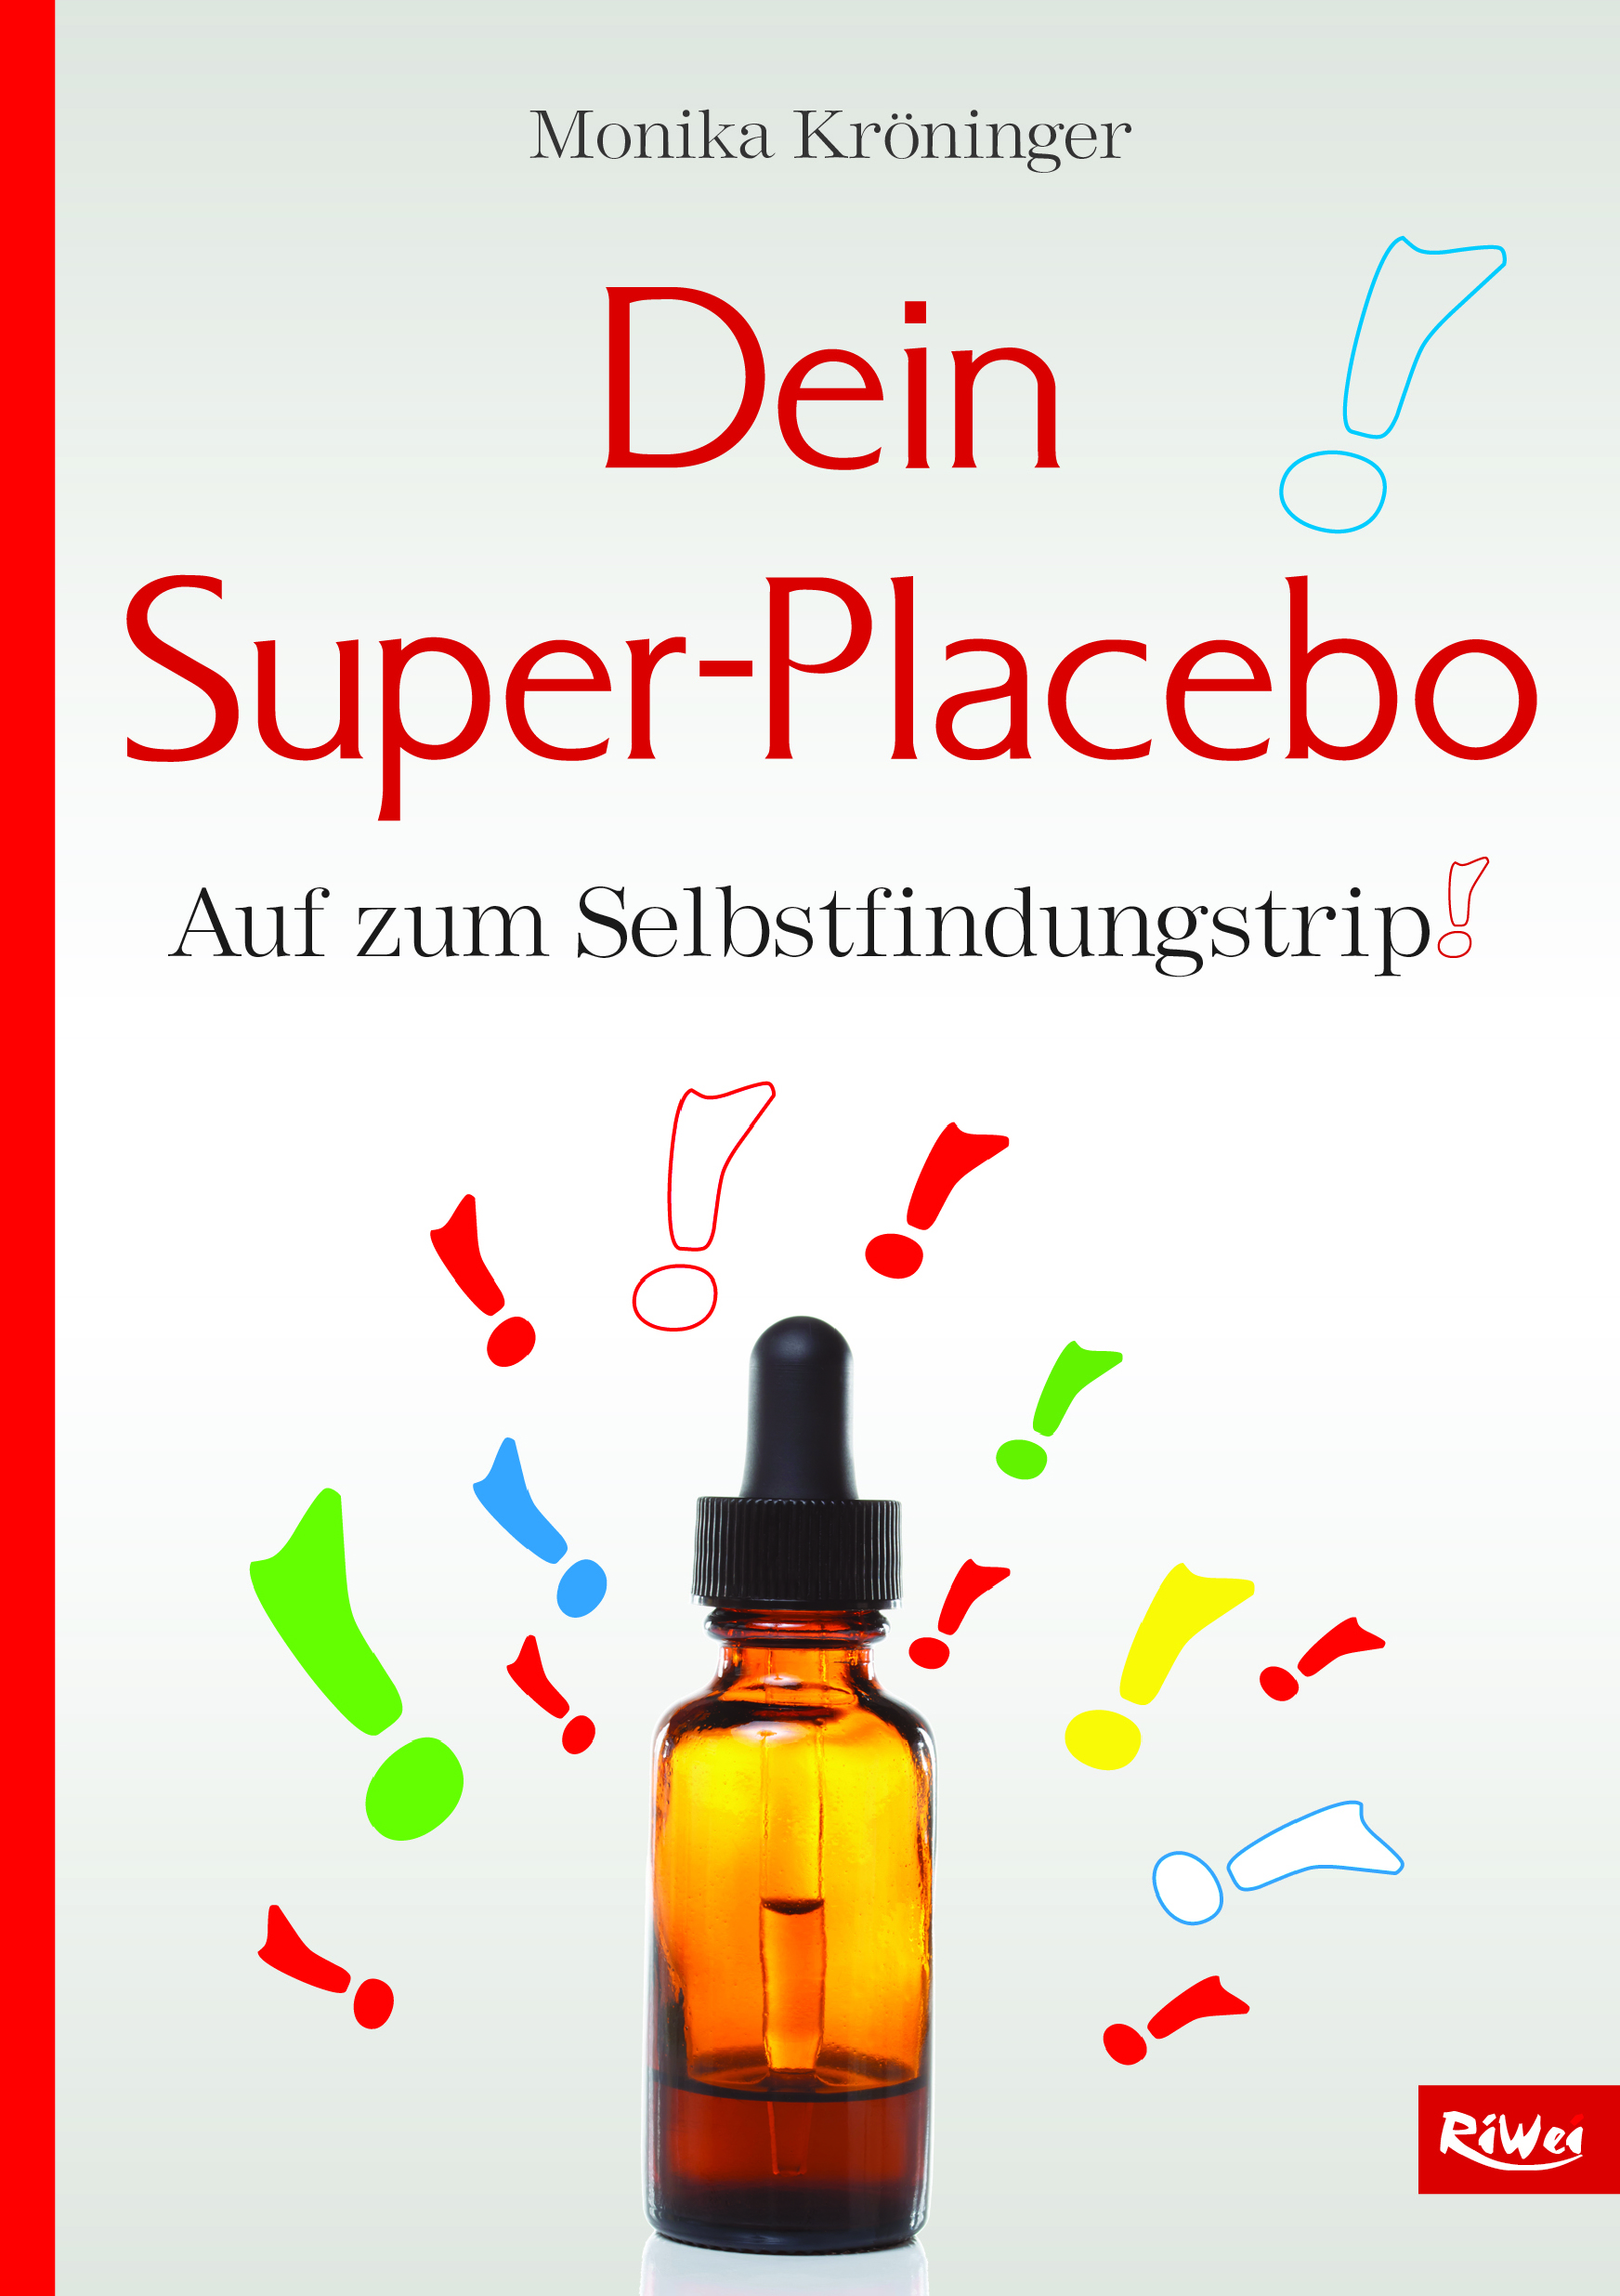 Monika Kröninger- Dein Super-Placebo